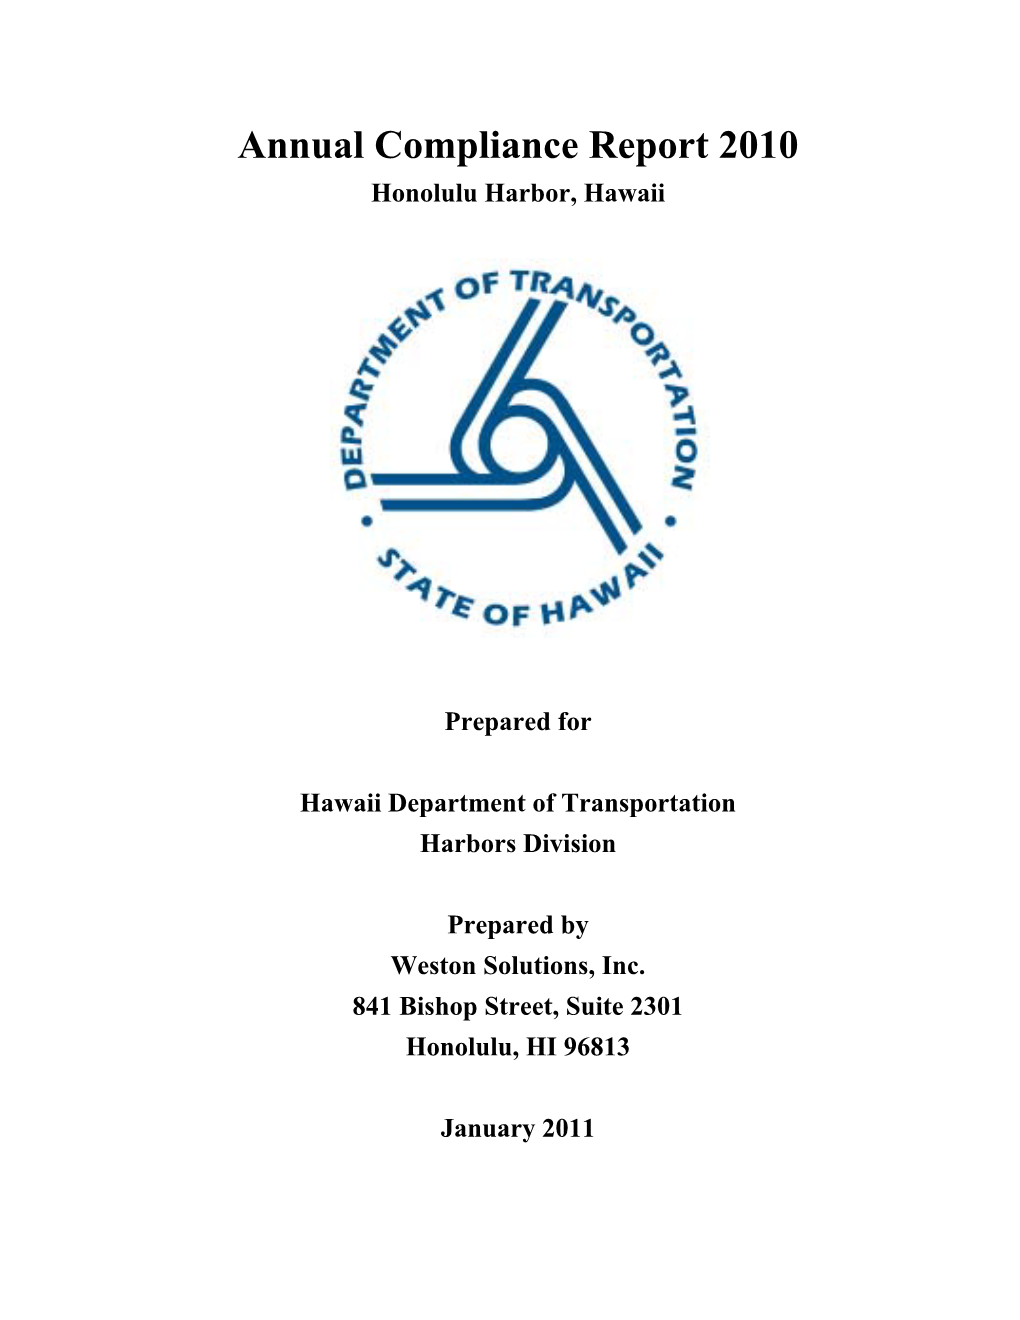 2010 Annual Compliance Report – Honolulu, 1 of 2